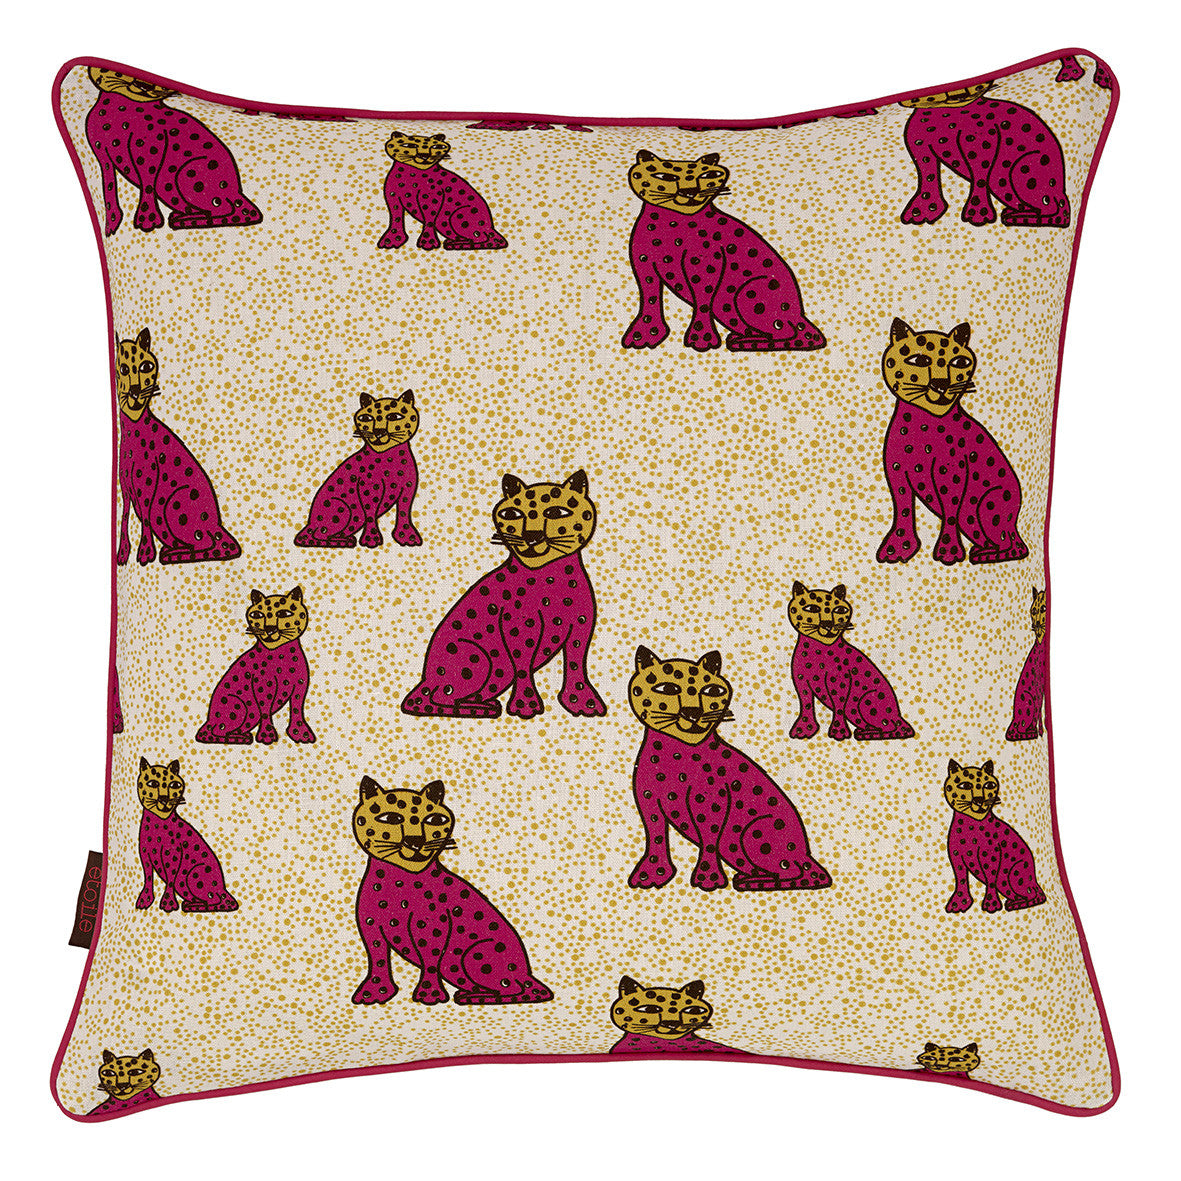 Fuchsia Embroidered Cheetah Throw Pillow Cover